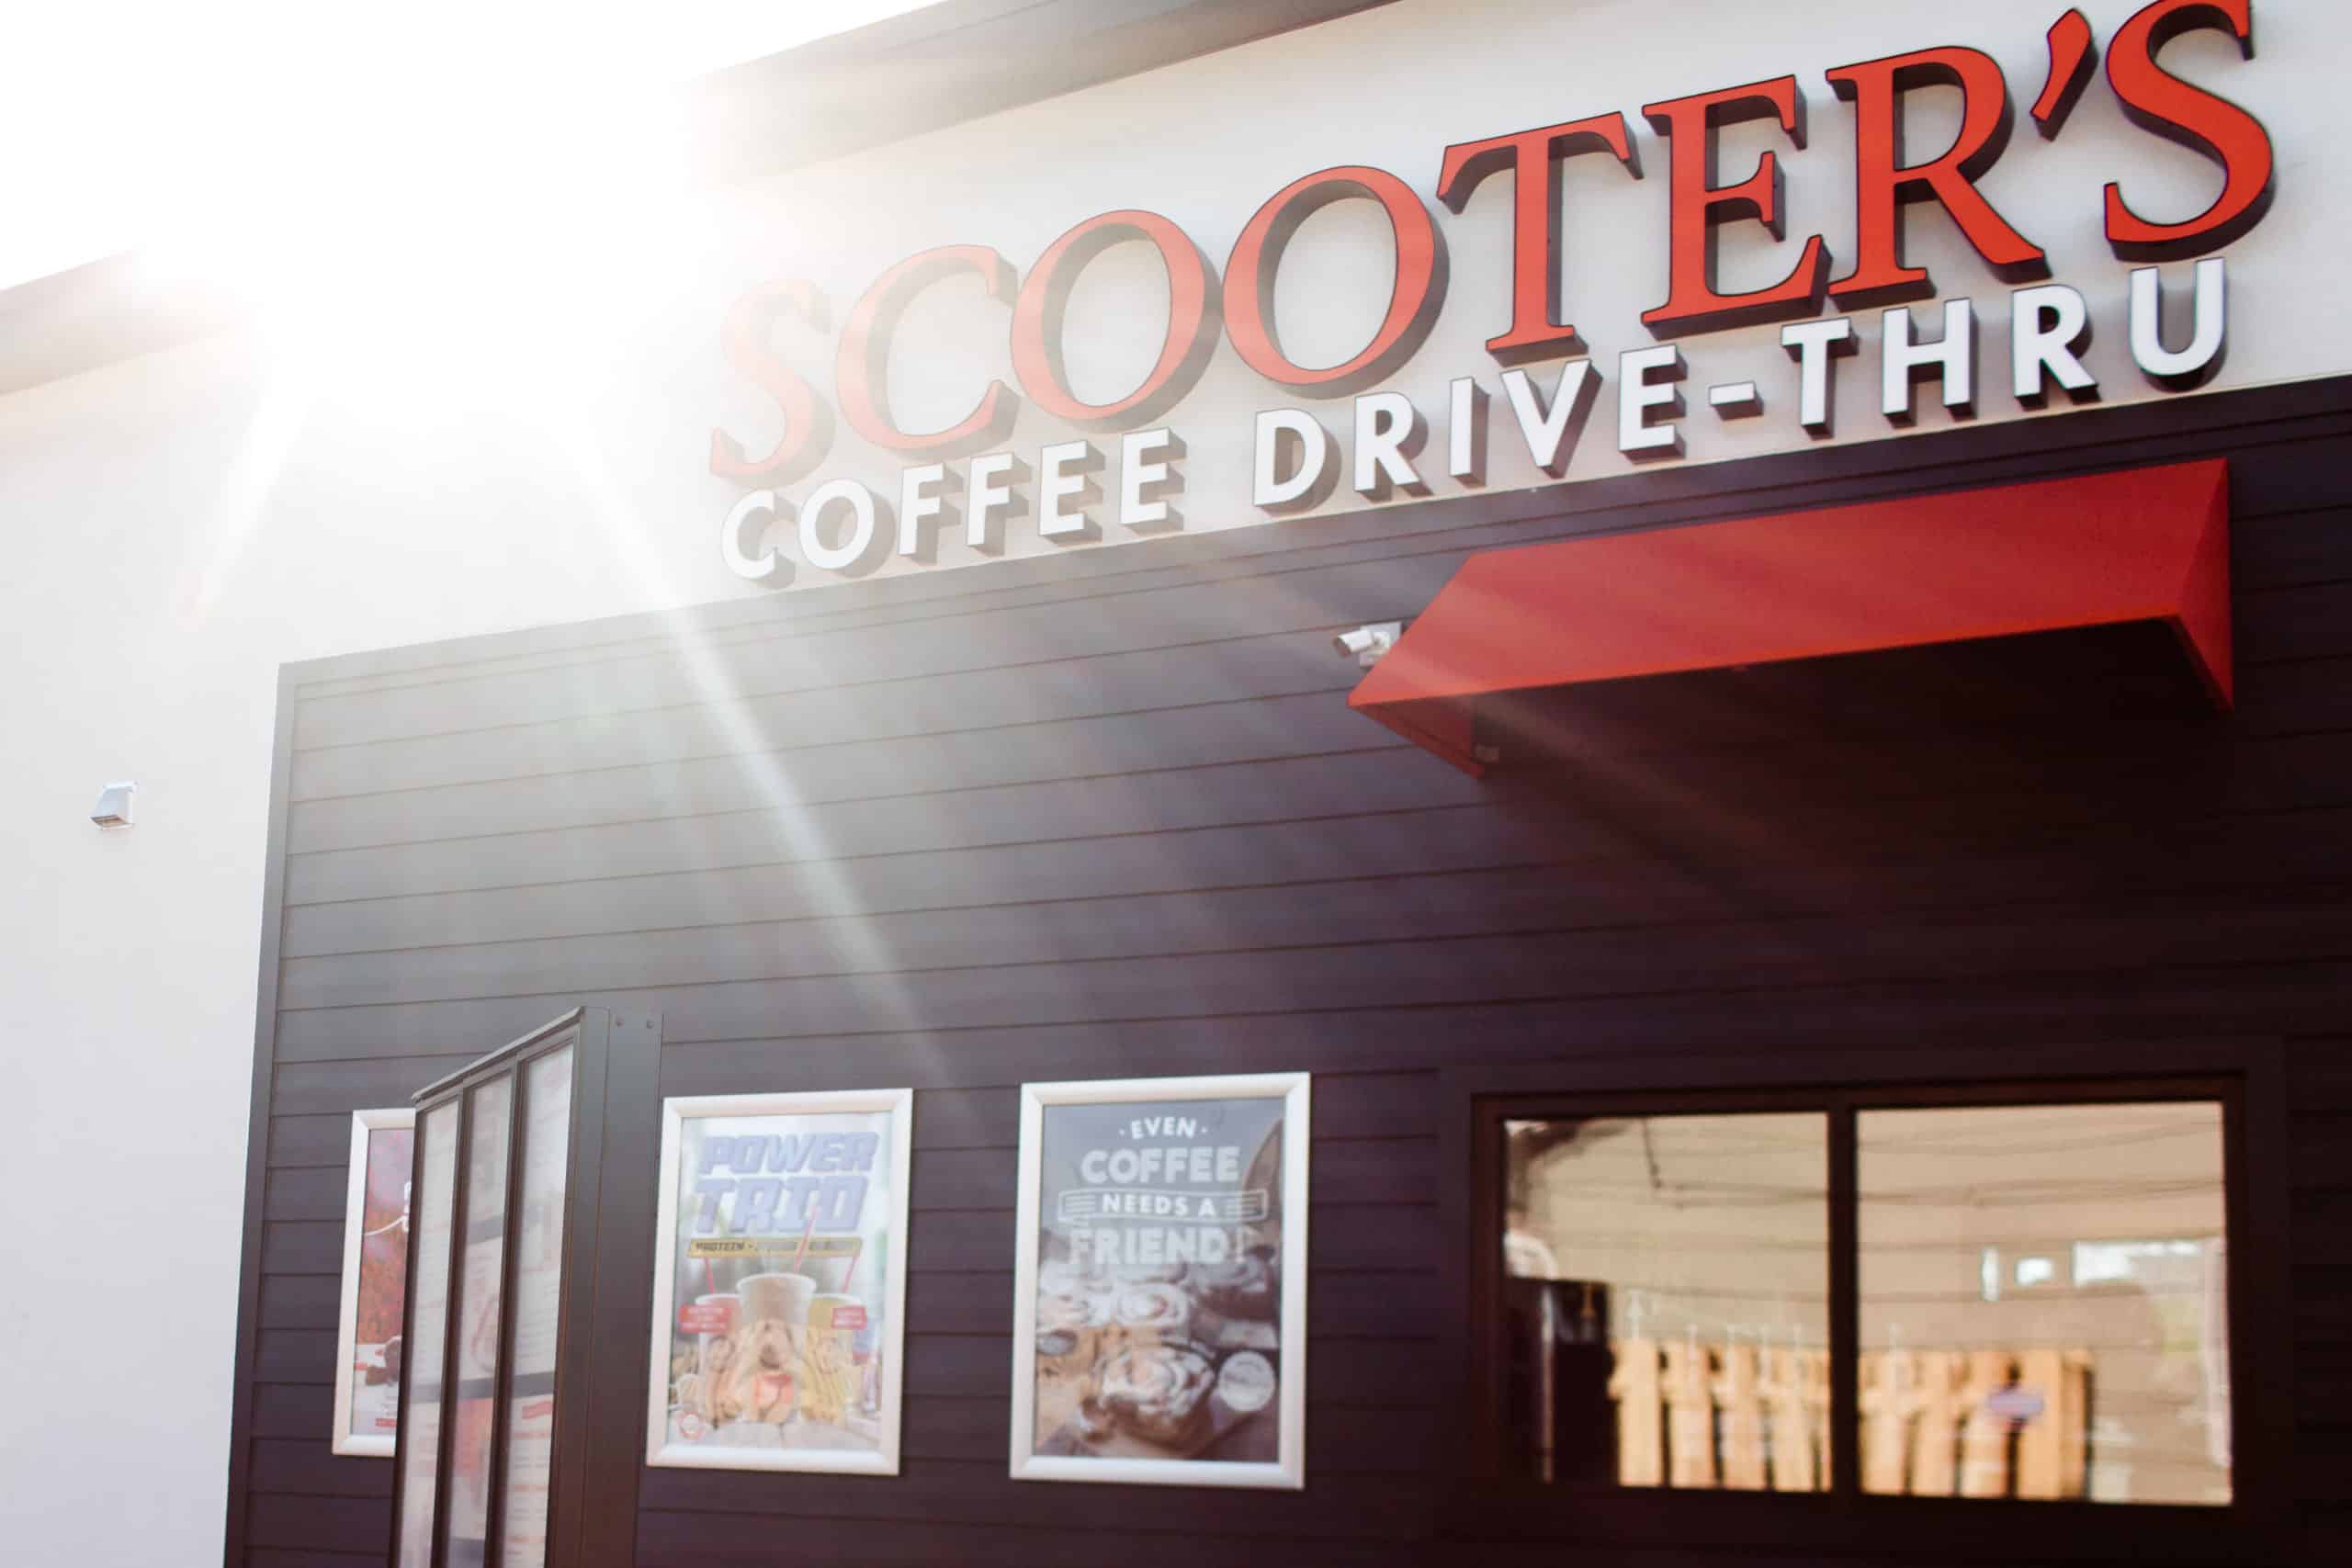 Scooter's Coffee Drive-Thru